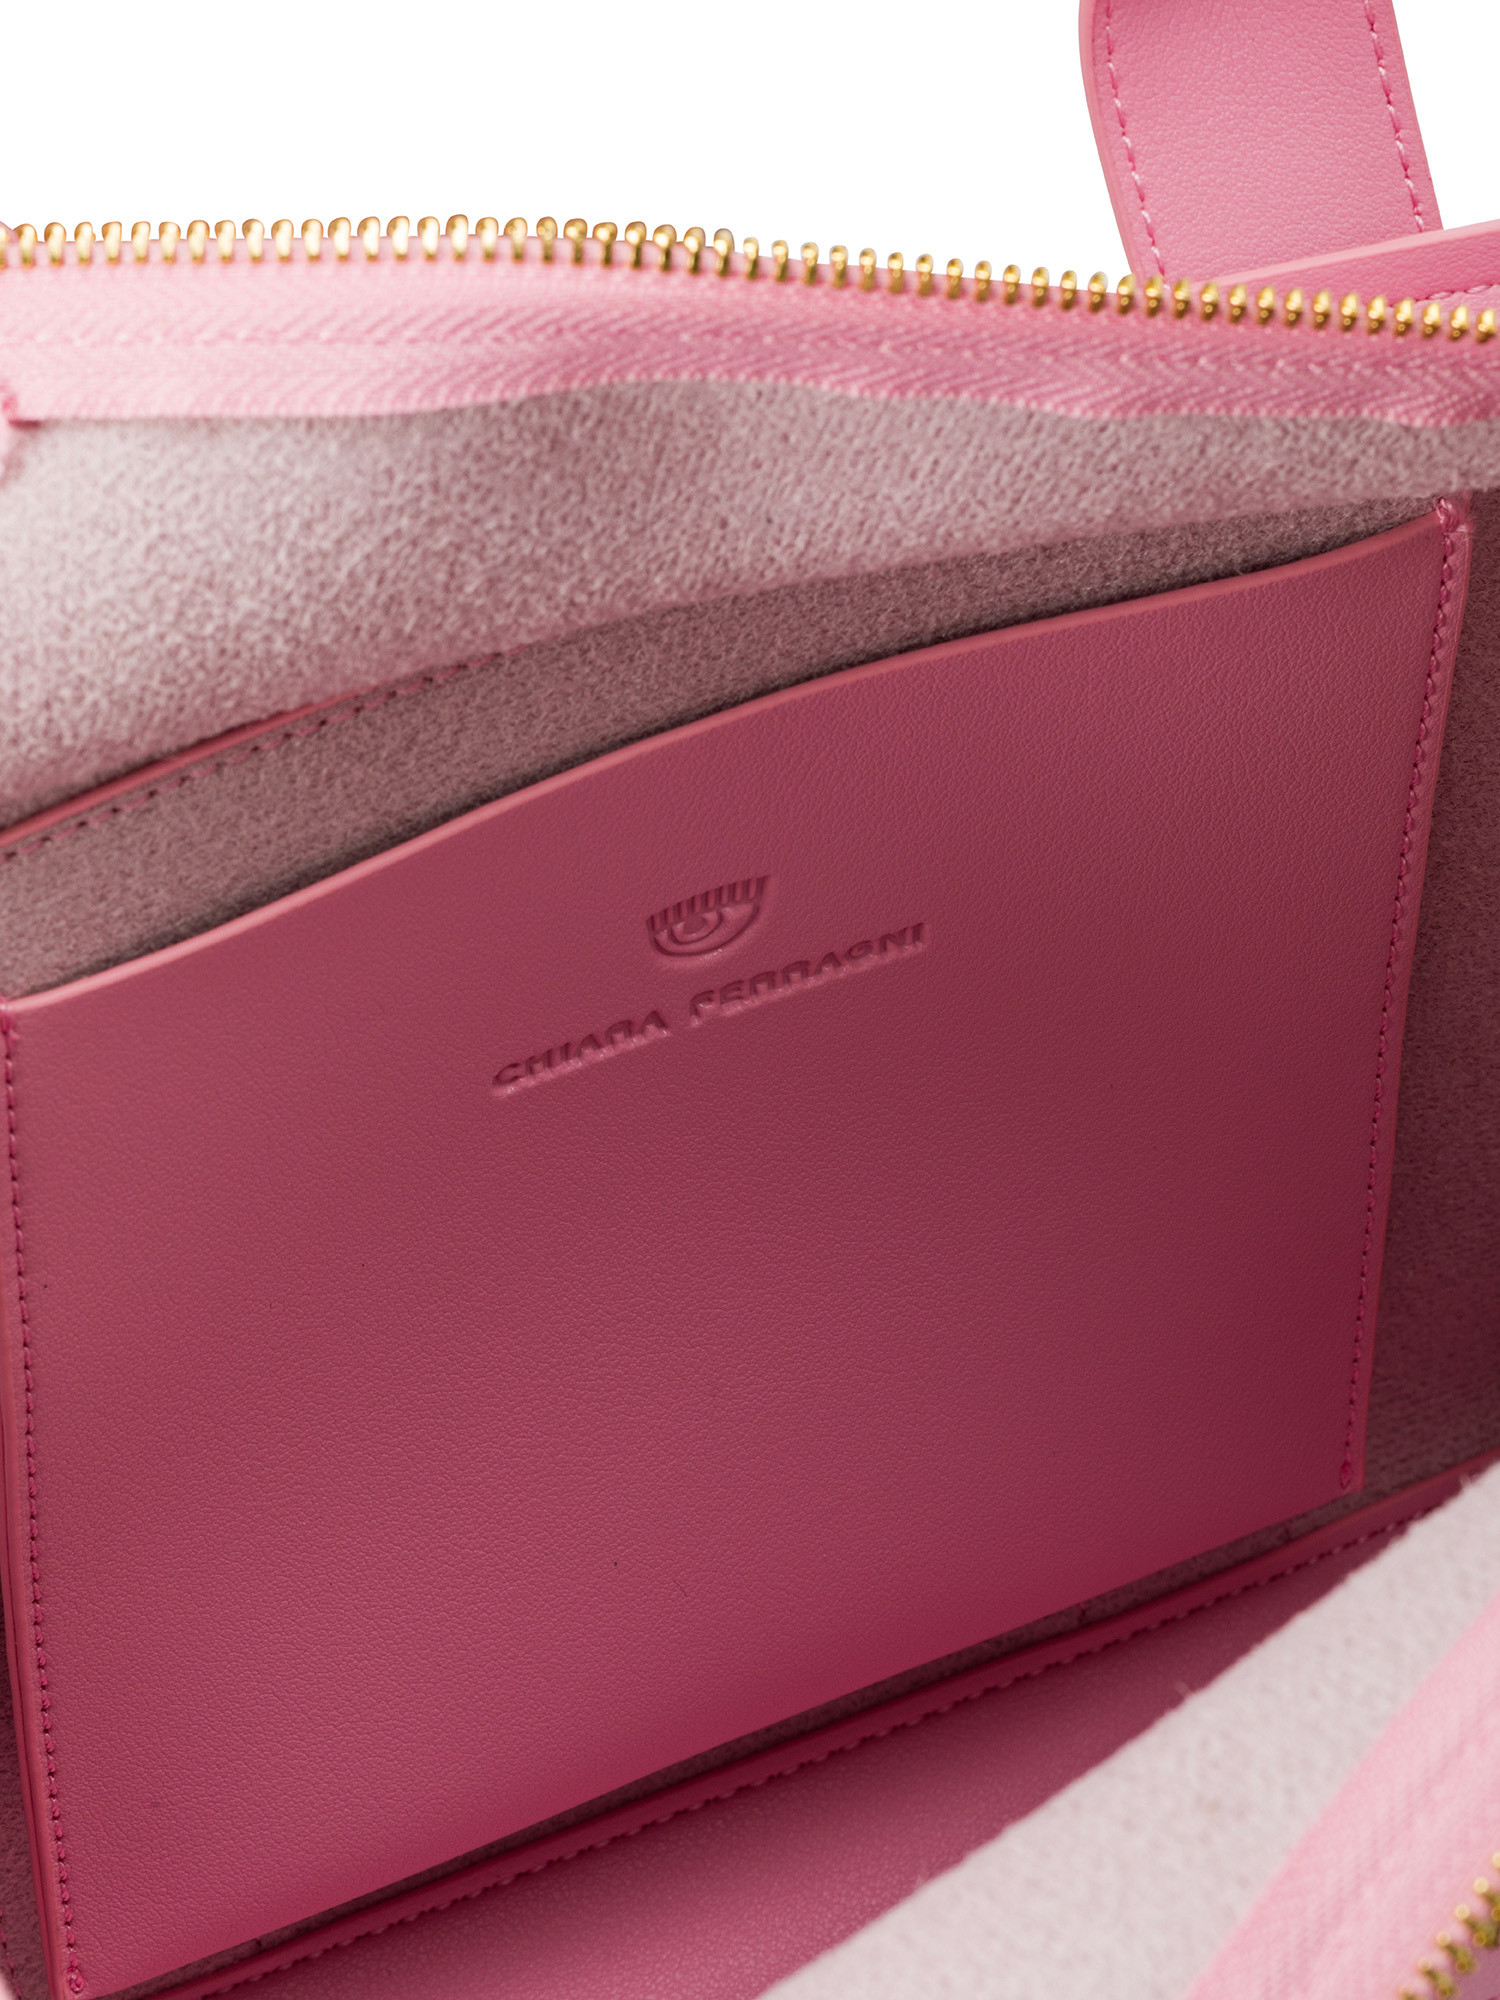 Chiara Ferragni - Range N stretch shopping bag, Light Pink, large image number 2